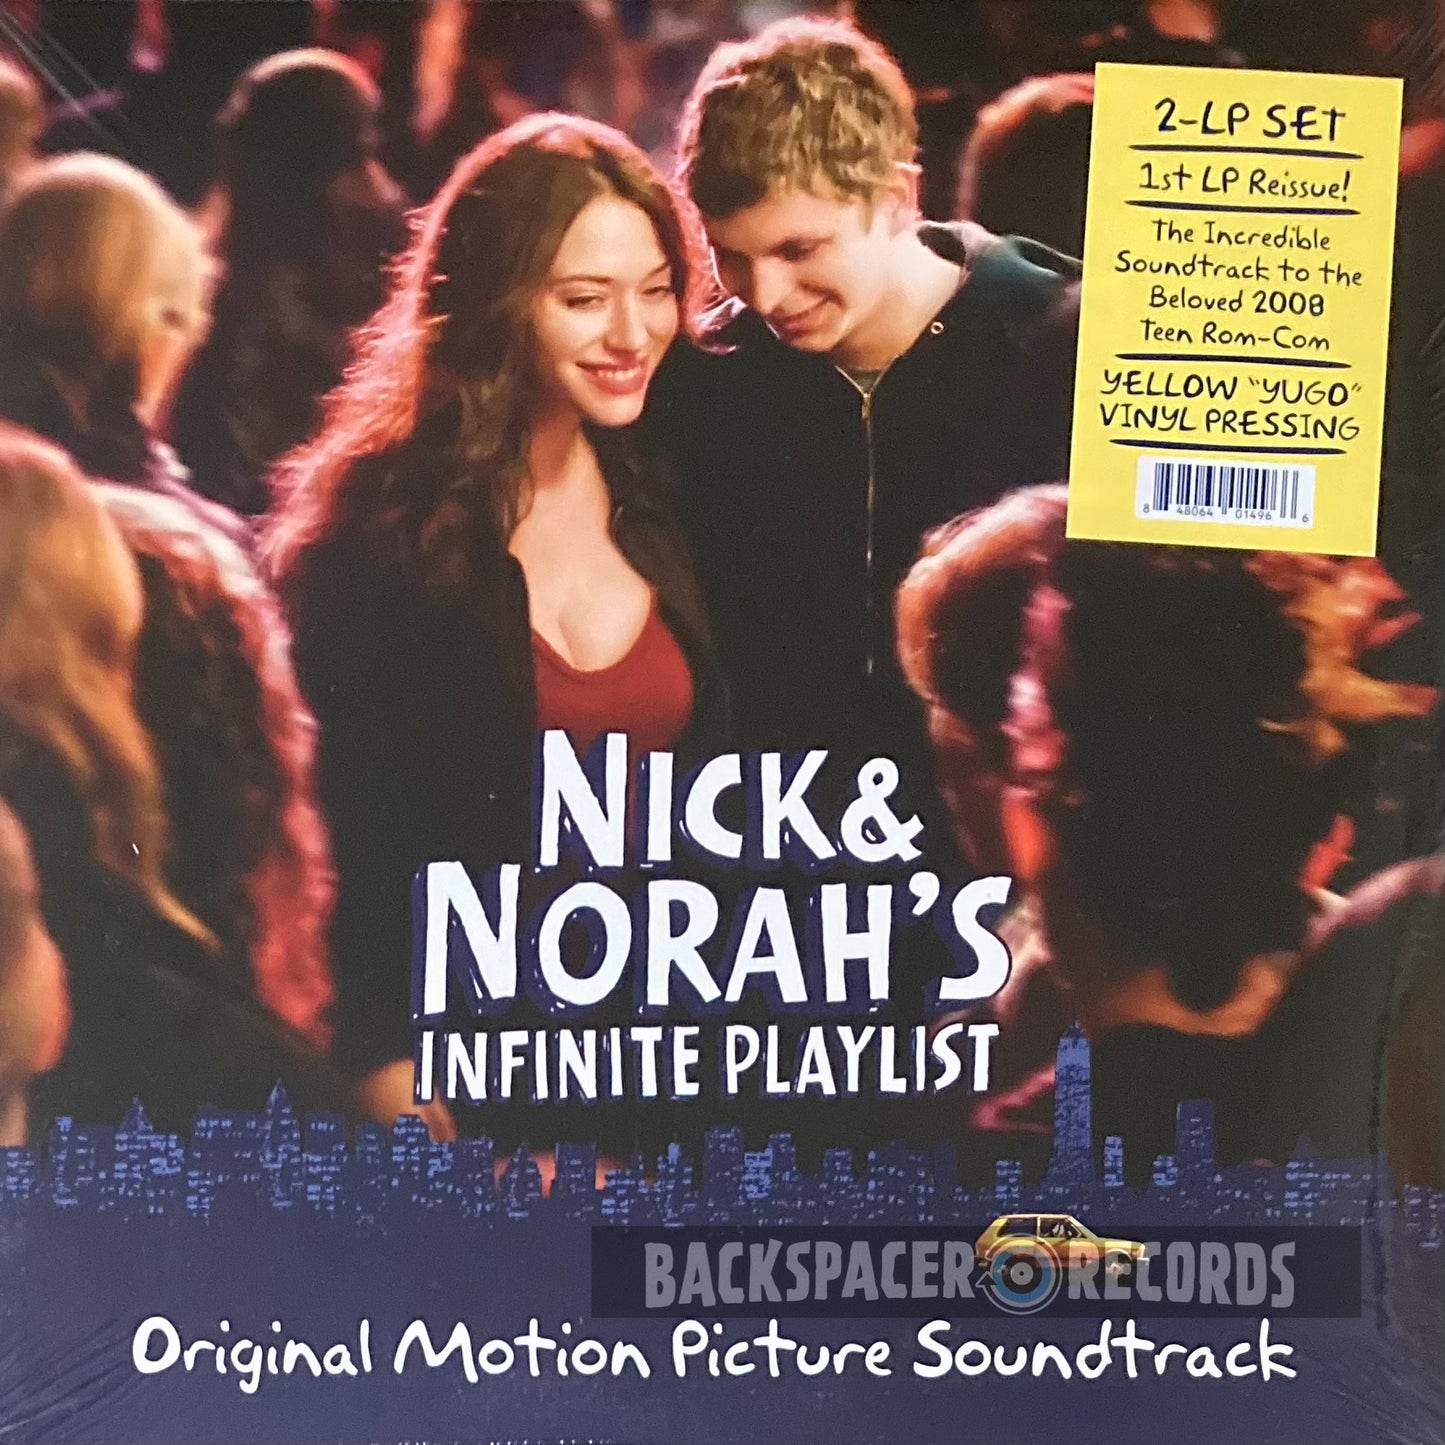 Nick & Norah's Infinite Playlist: Original Motion Picture Soundtrack - Various Artists (Limited Edition) 2-LP (Sealed)